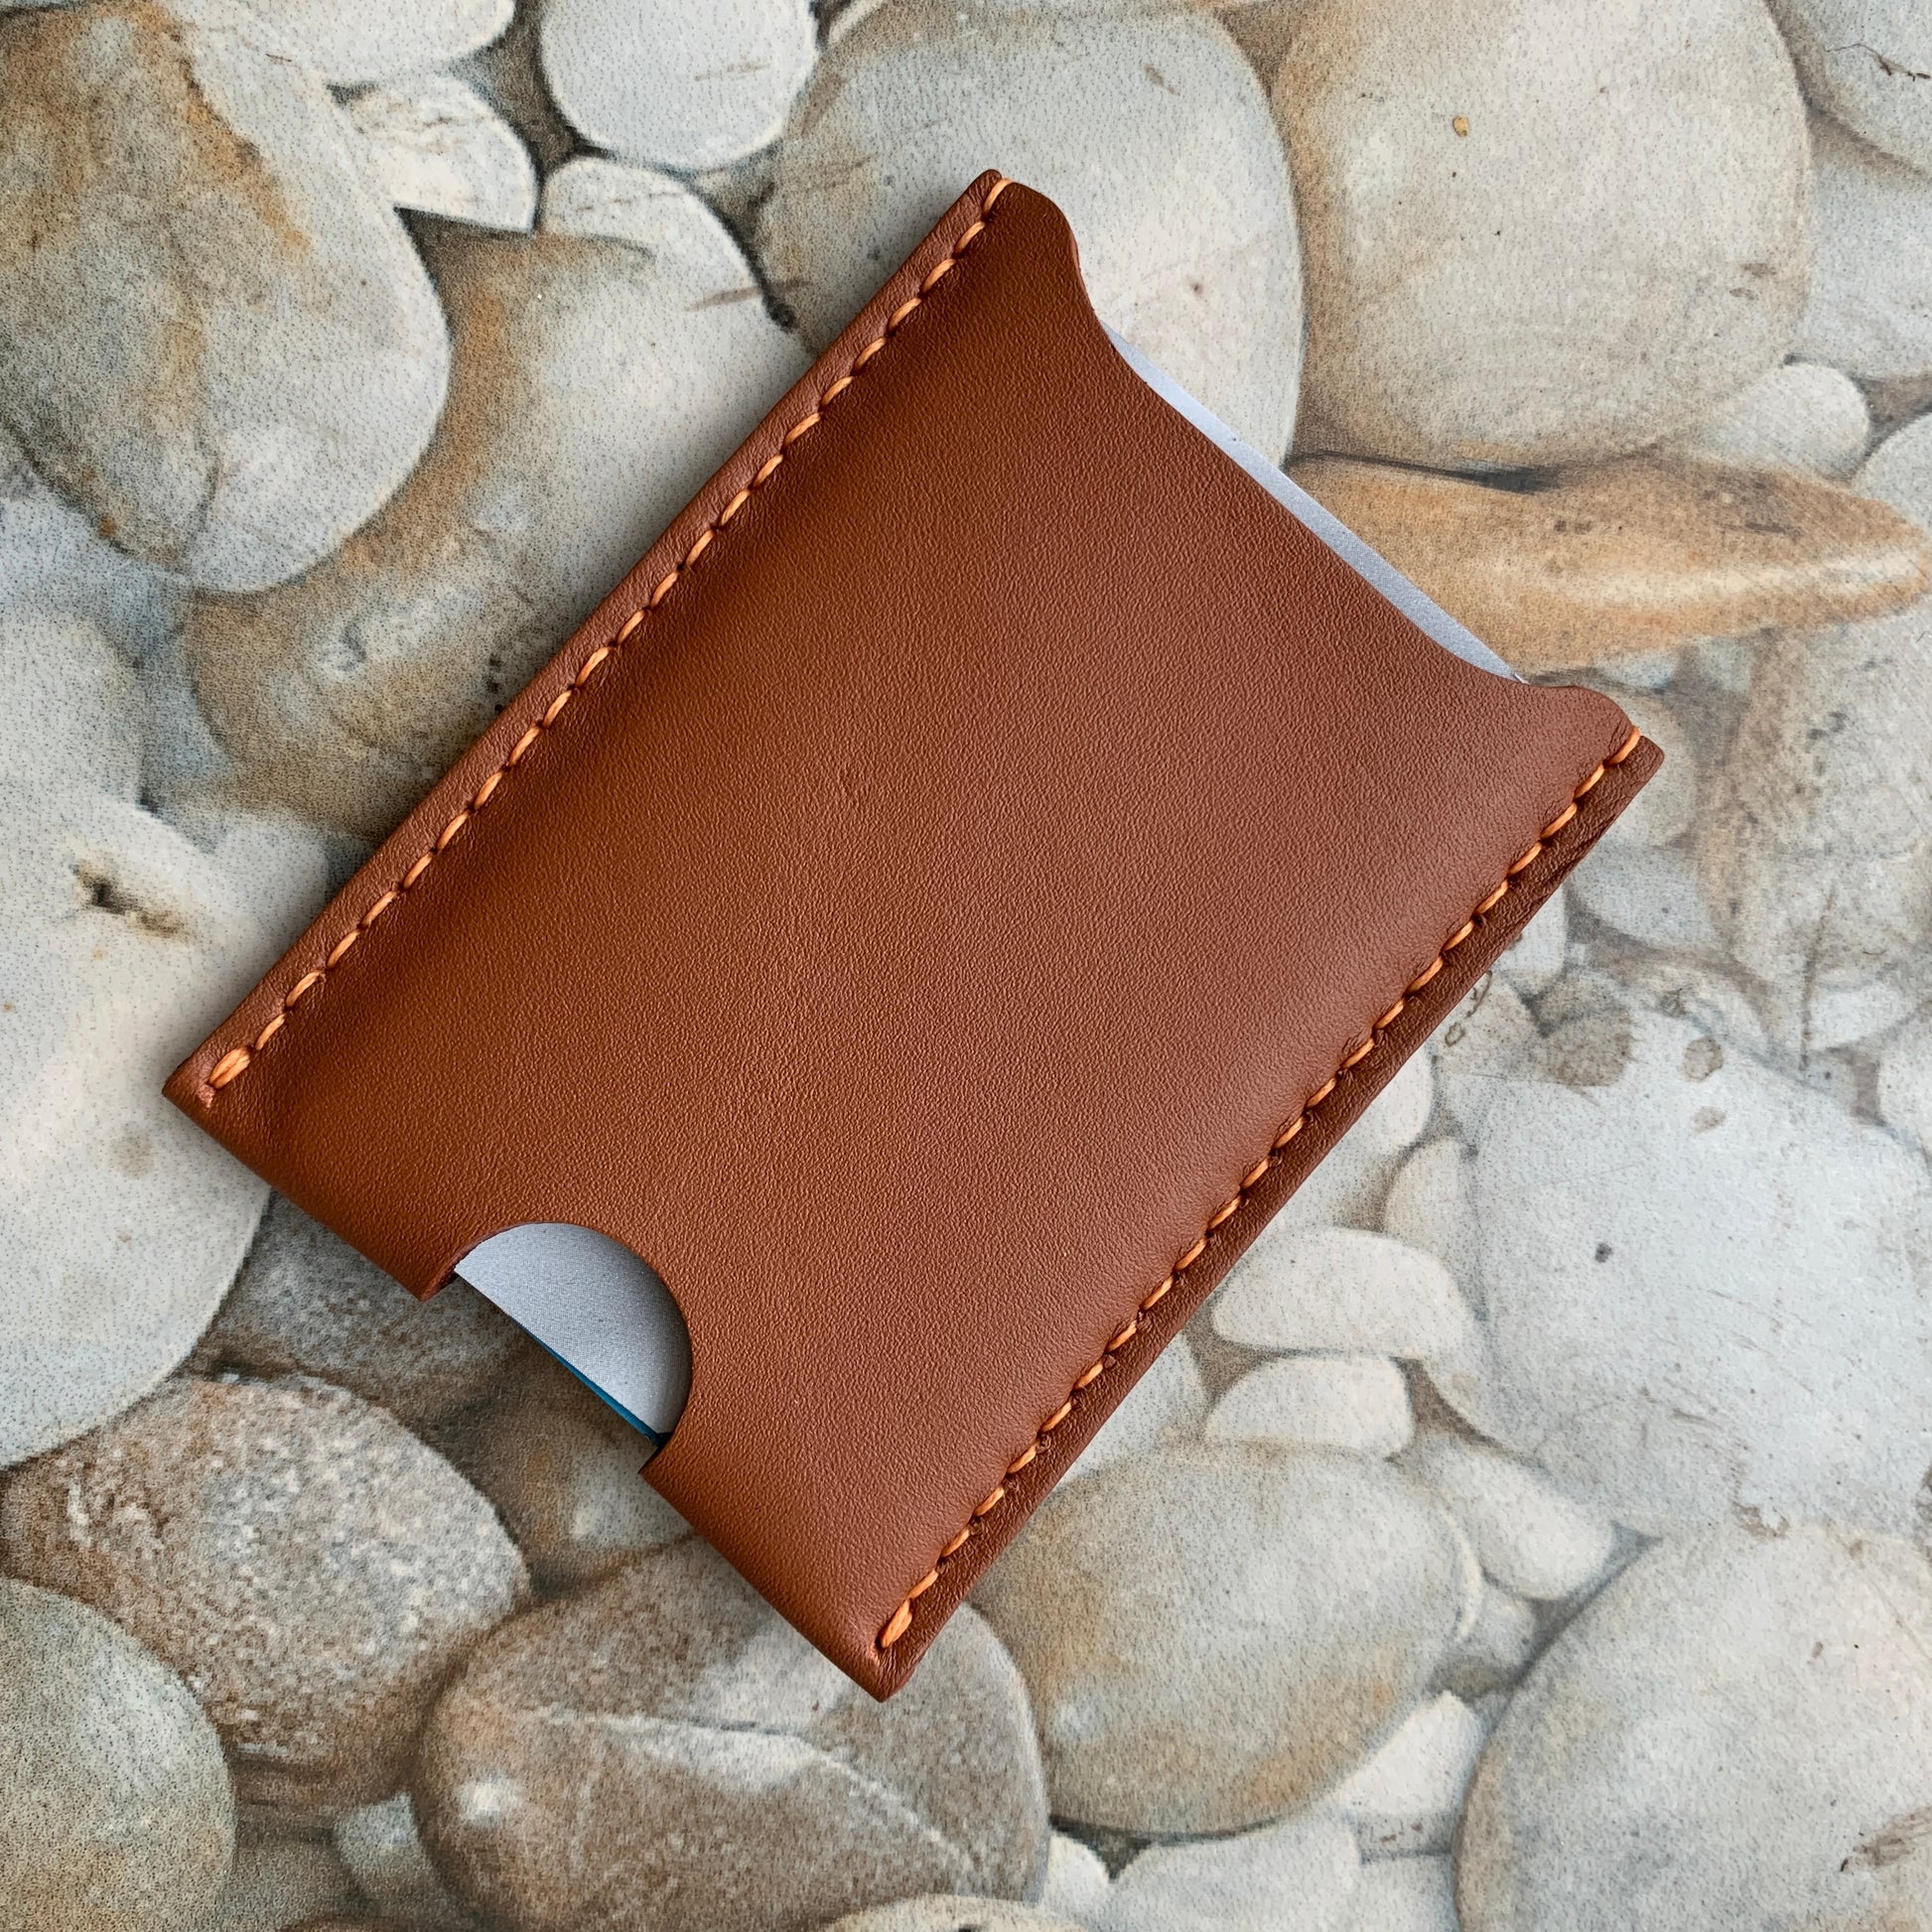 Leather Card Holder Credit Card Wallet Minimalist Card 